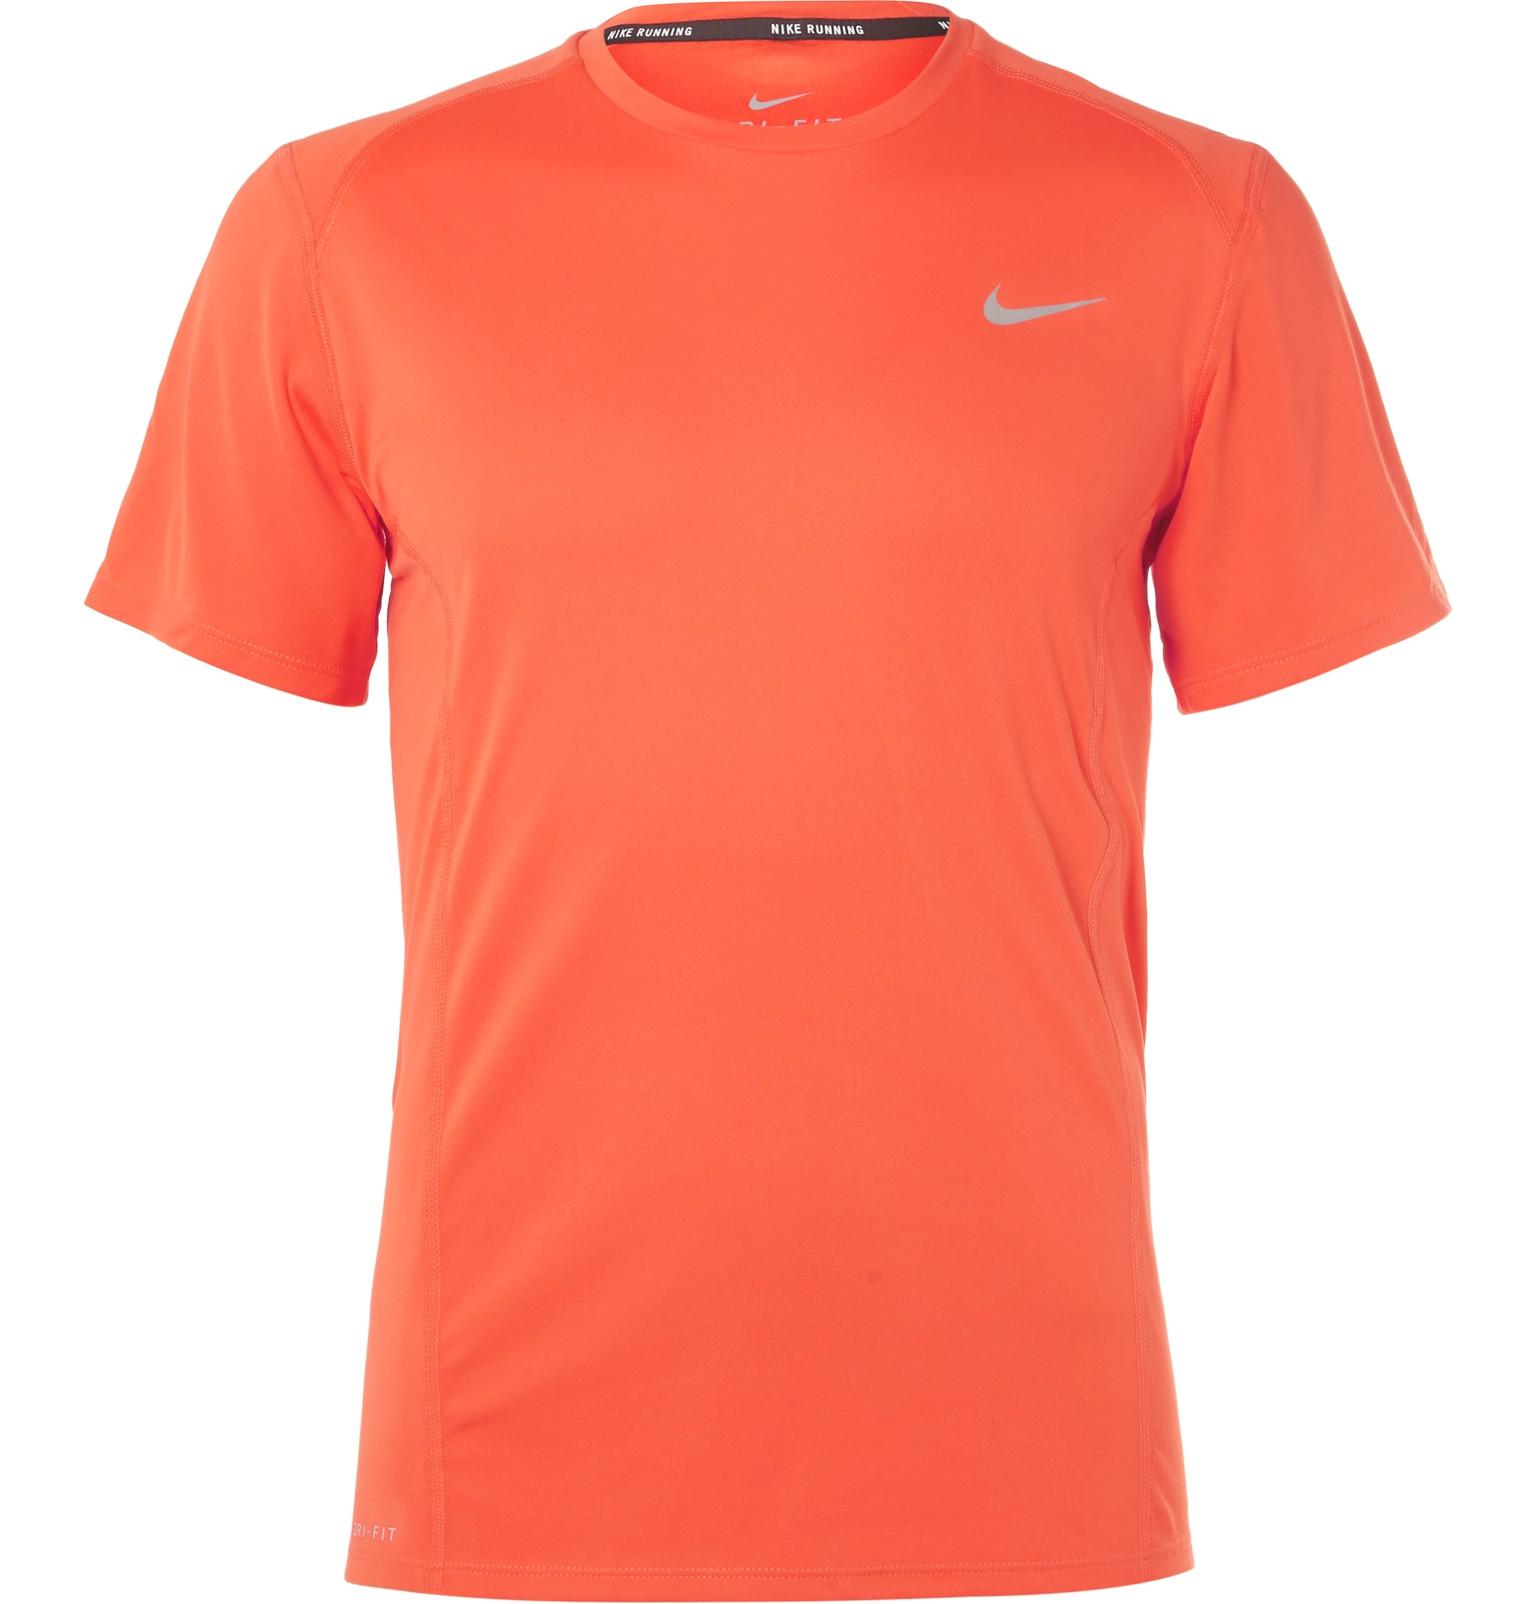 Nike Synthetic Dry Miler Dri-fit T-shirt in Orange for Men - Lyst